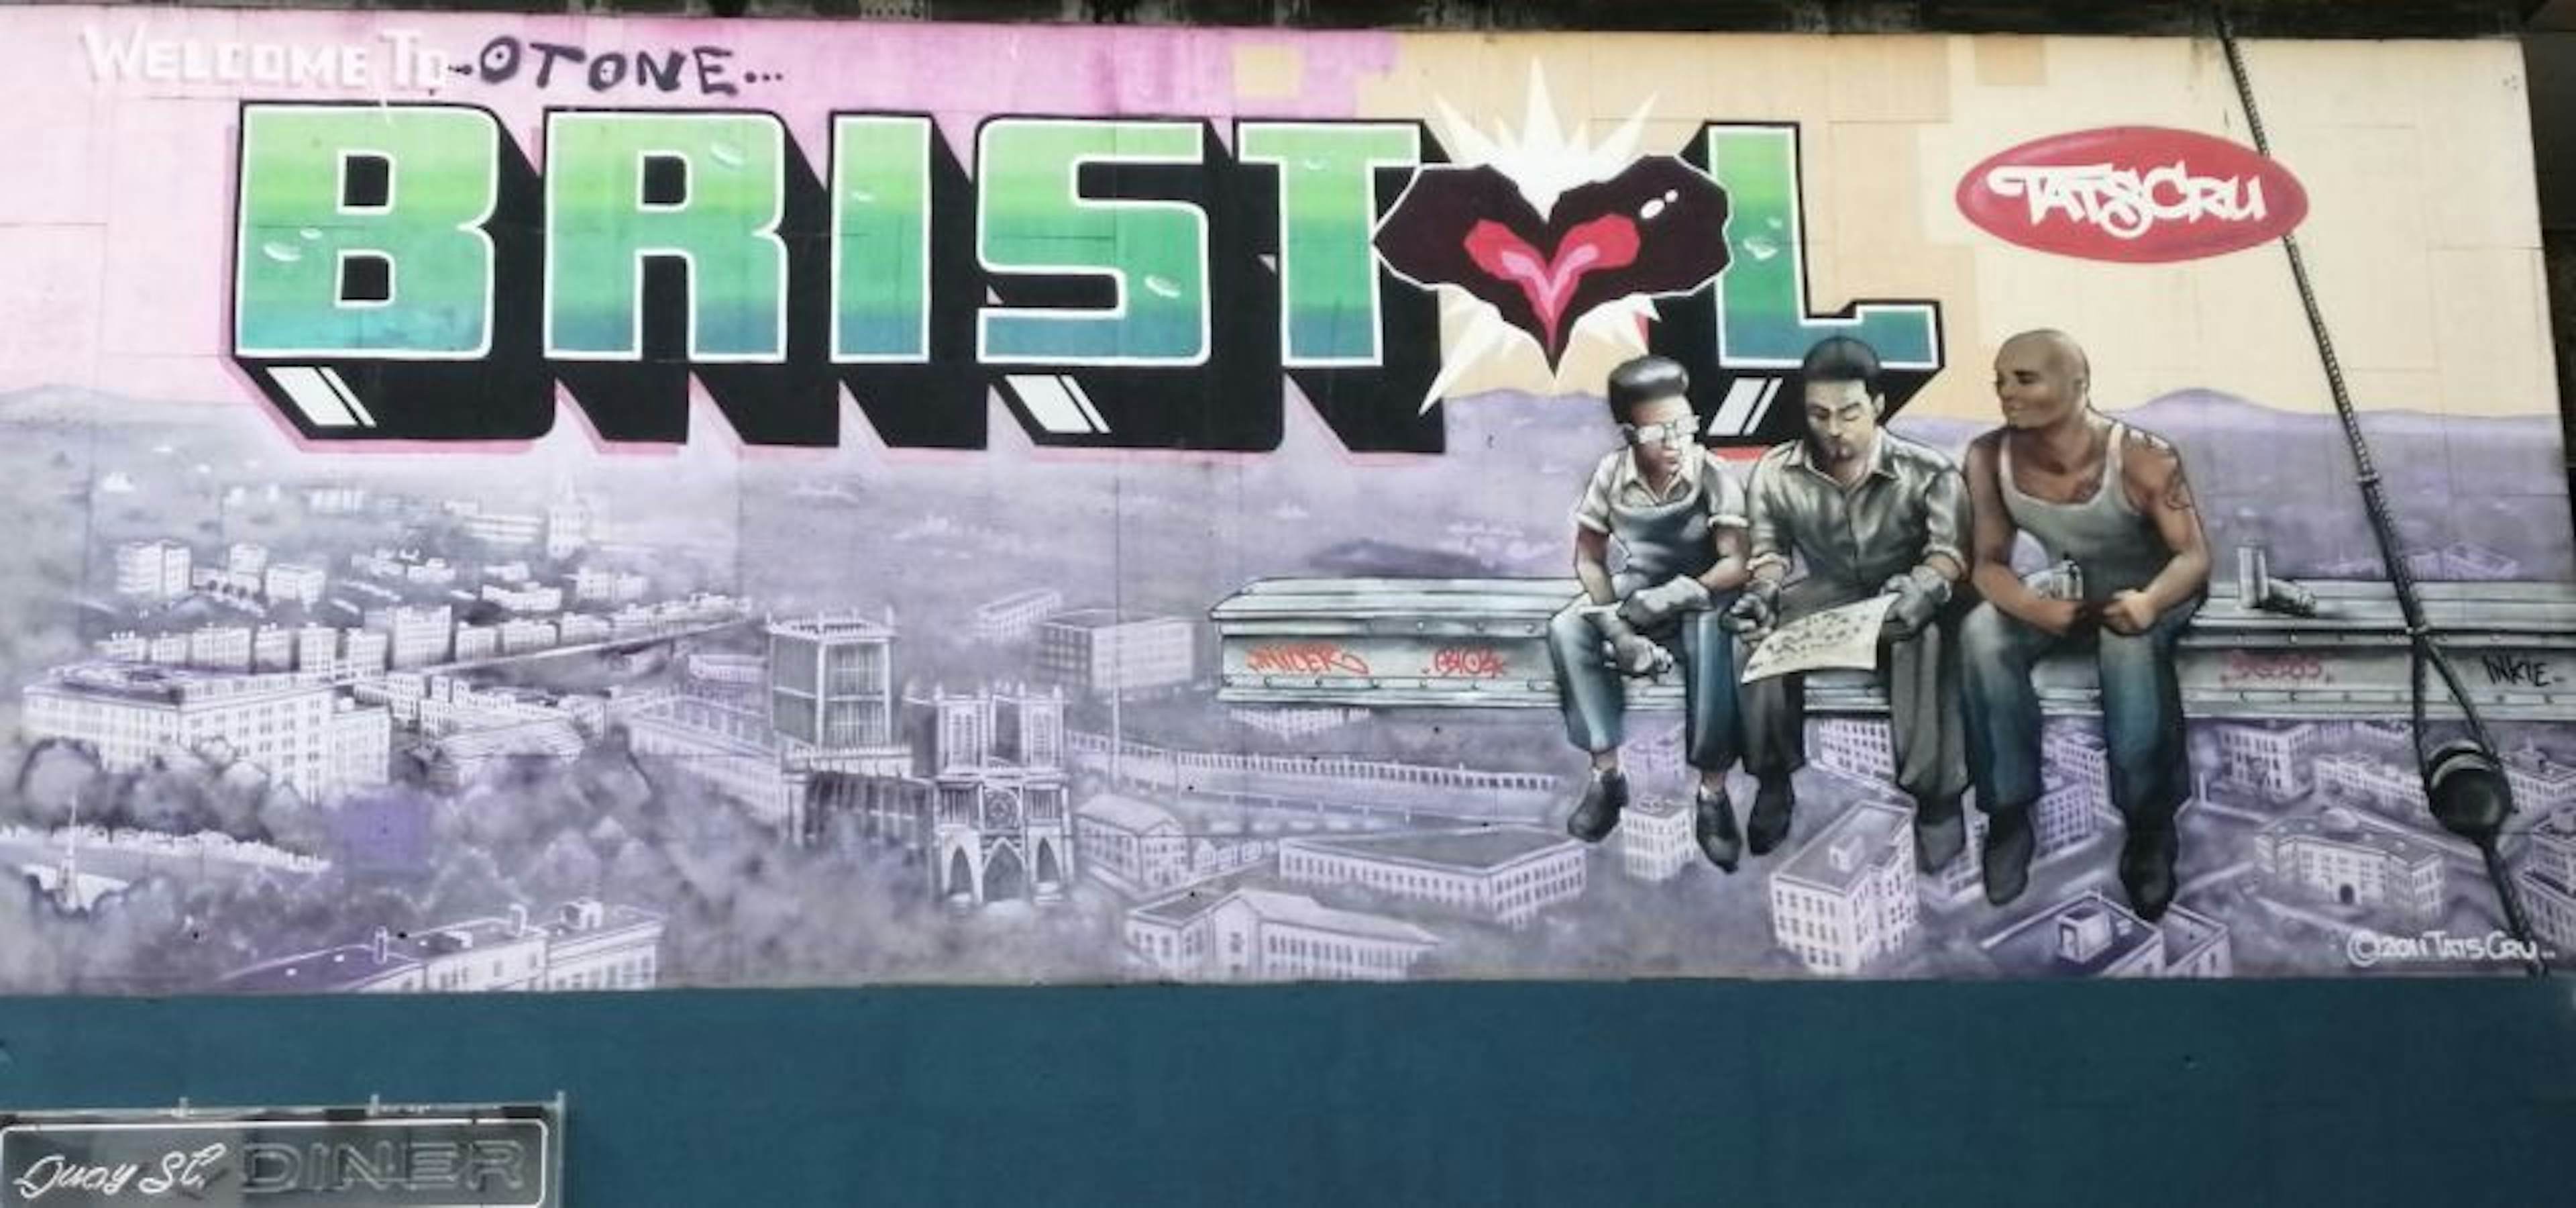 Street Art Bristol: Banksy, A Trip through the Graffiti Capital image